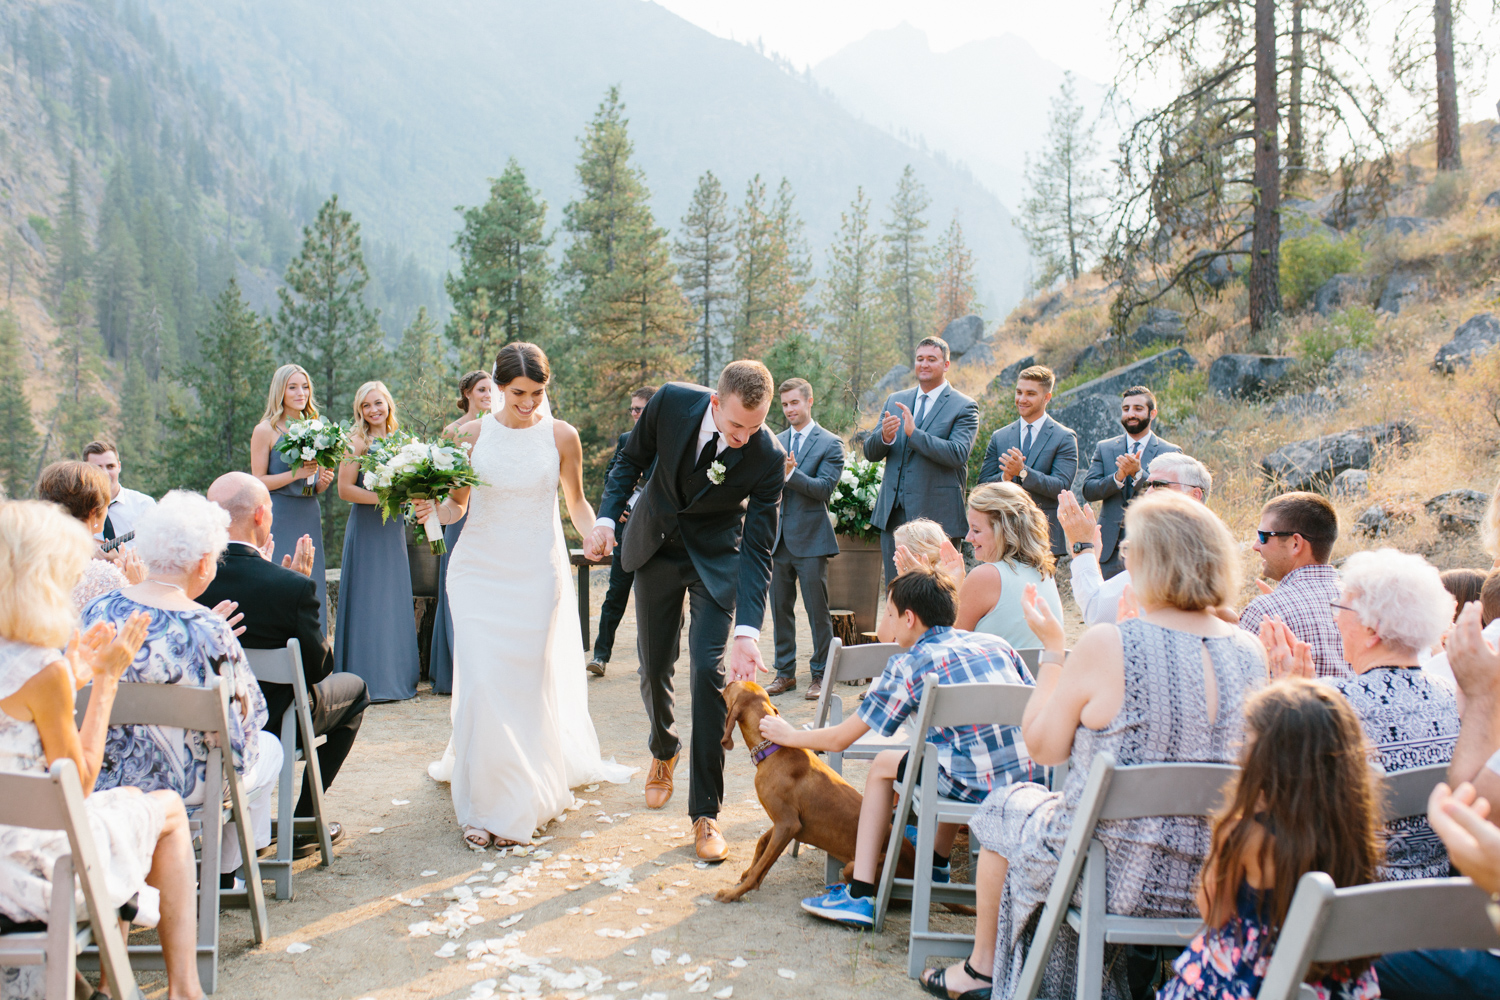 Grey and White Wedding in the Mountains of Leavenworth, Washington | Sleeping Lady | Classic and Timeless Wedding | VSCO | Leavenworth Wedding Ceremony at Sleeping Lady.jpg-1181.jpg